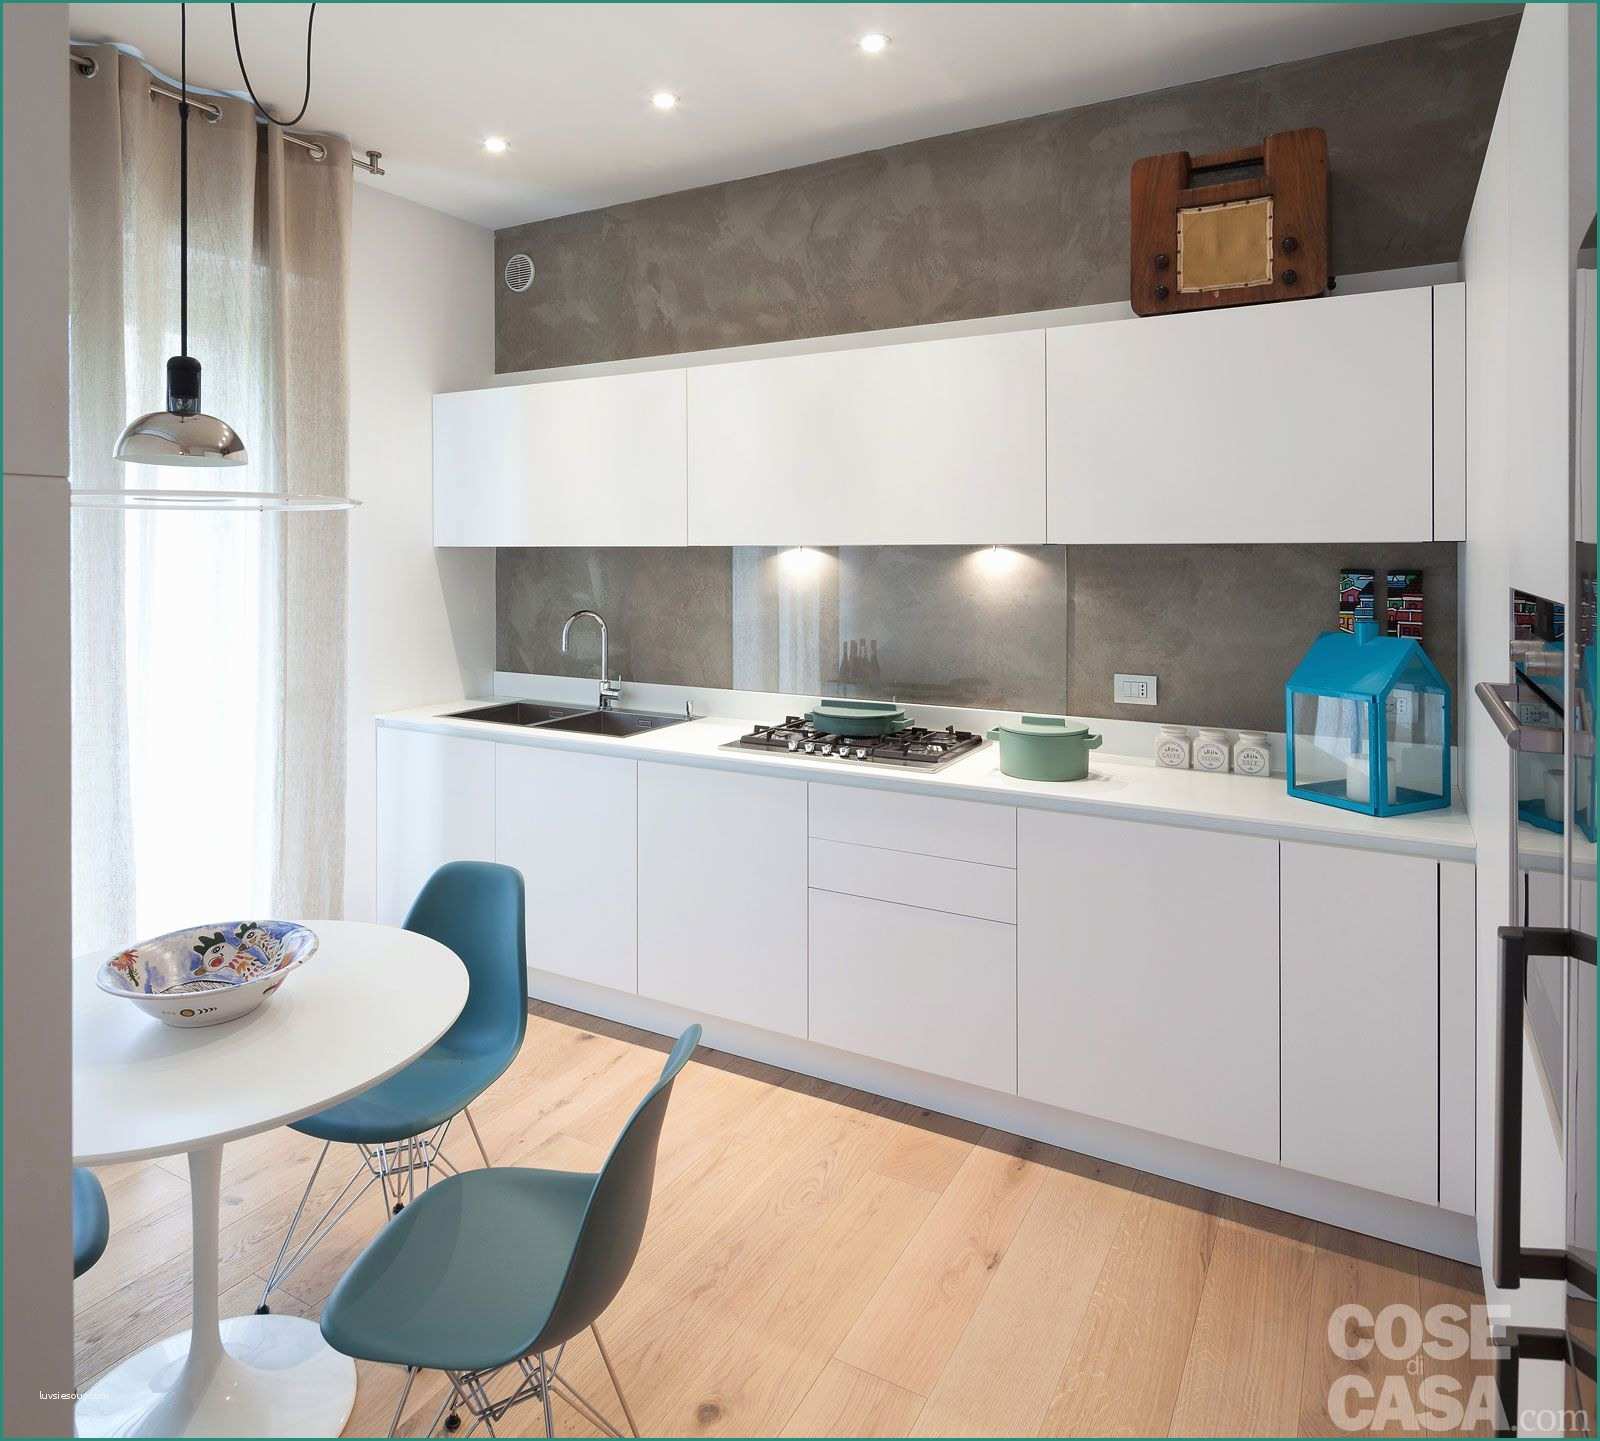 Cucine In Muratura Moderne Colorate E Maxi Trilocale Design E ispirazioni Scandinave Per La Casa Di 125